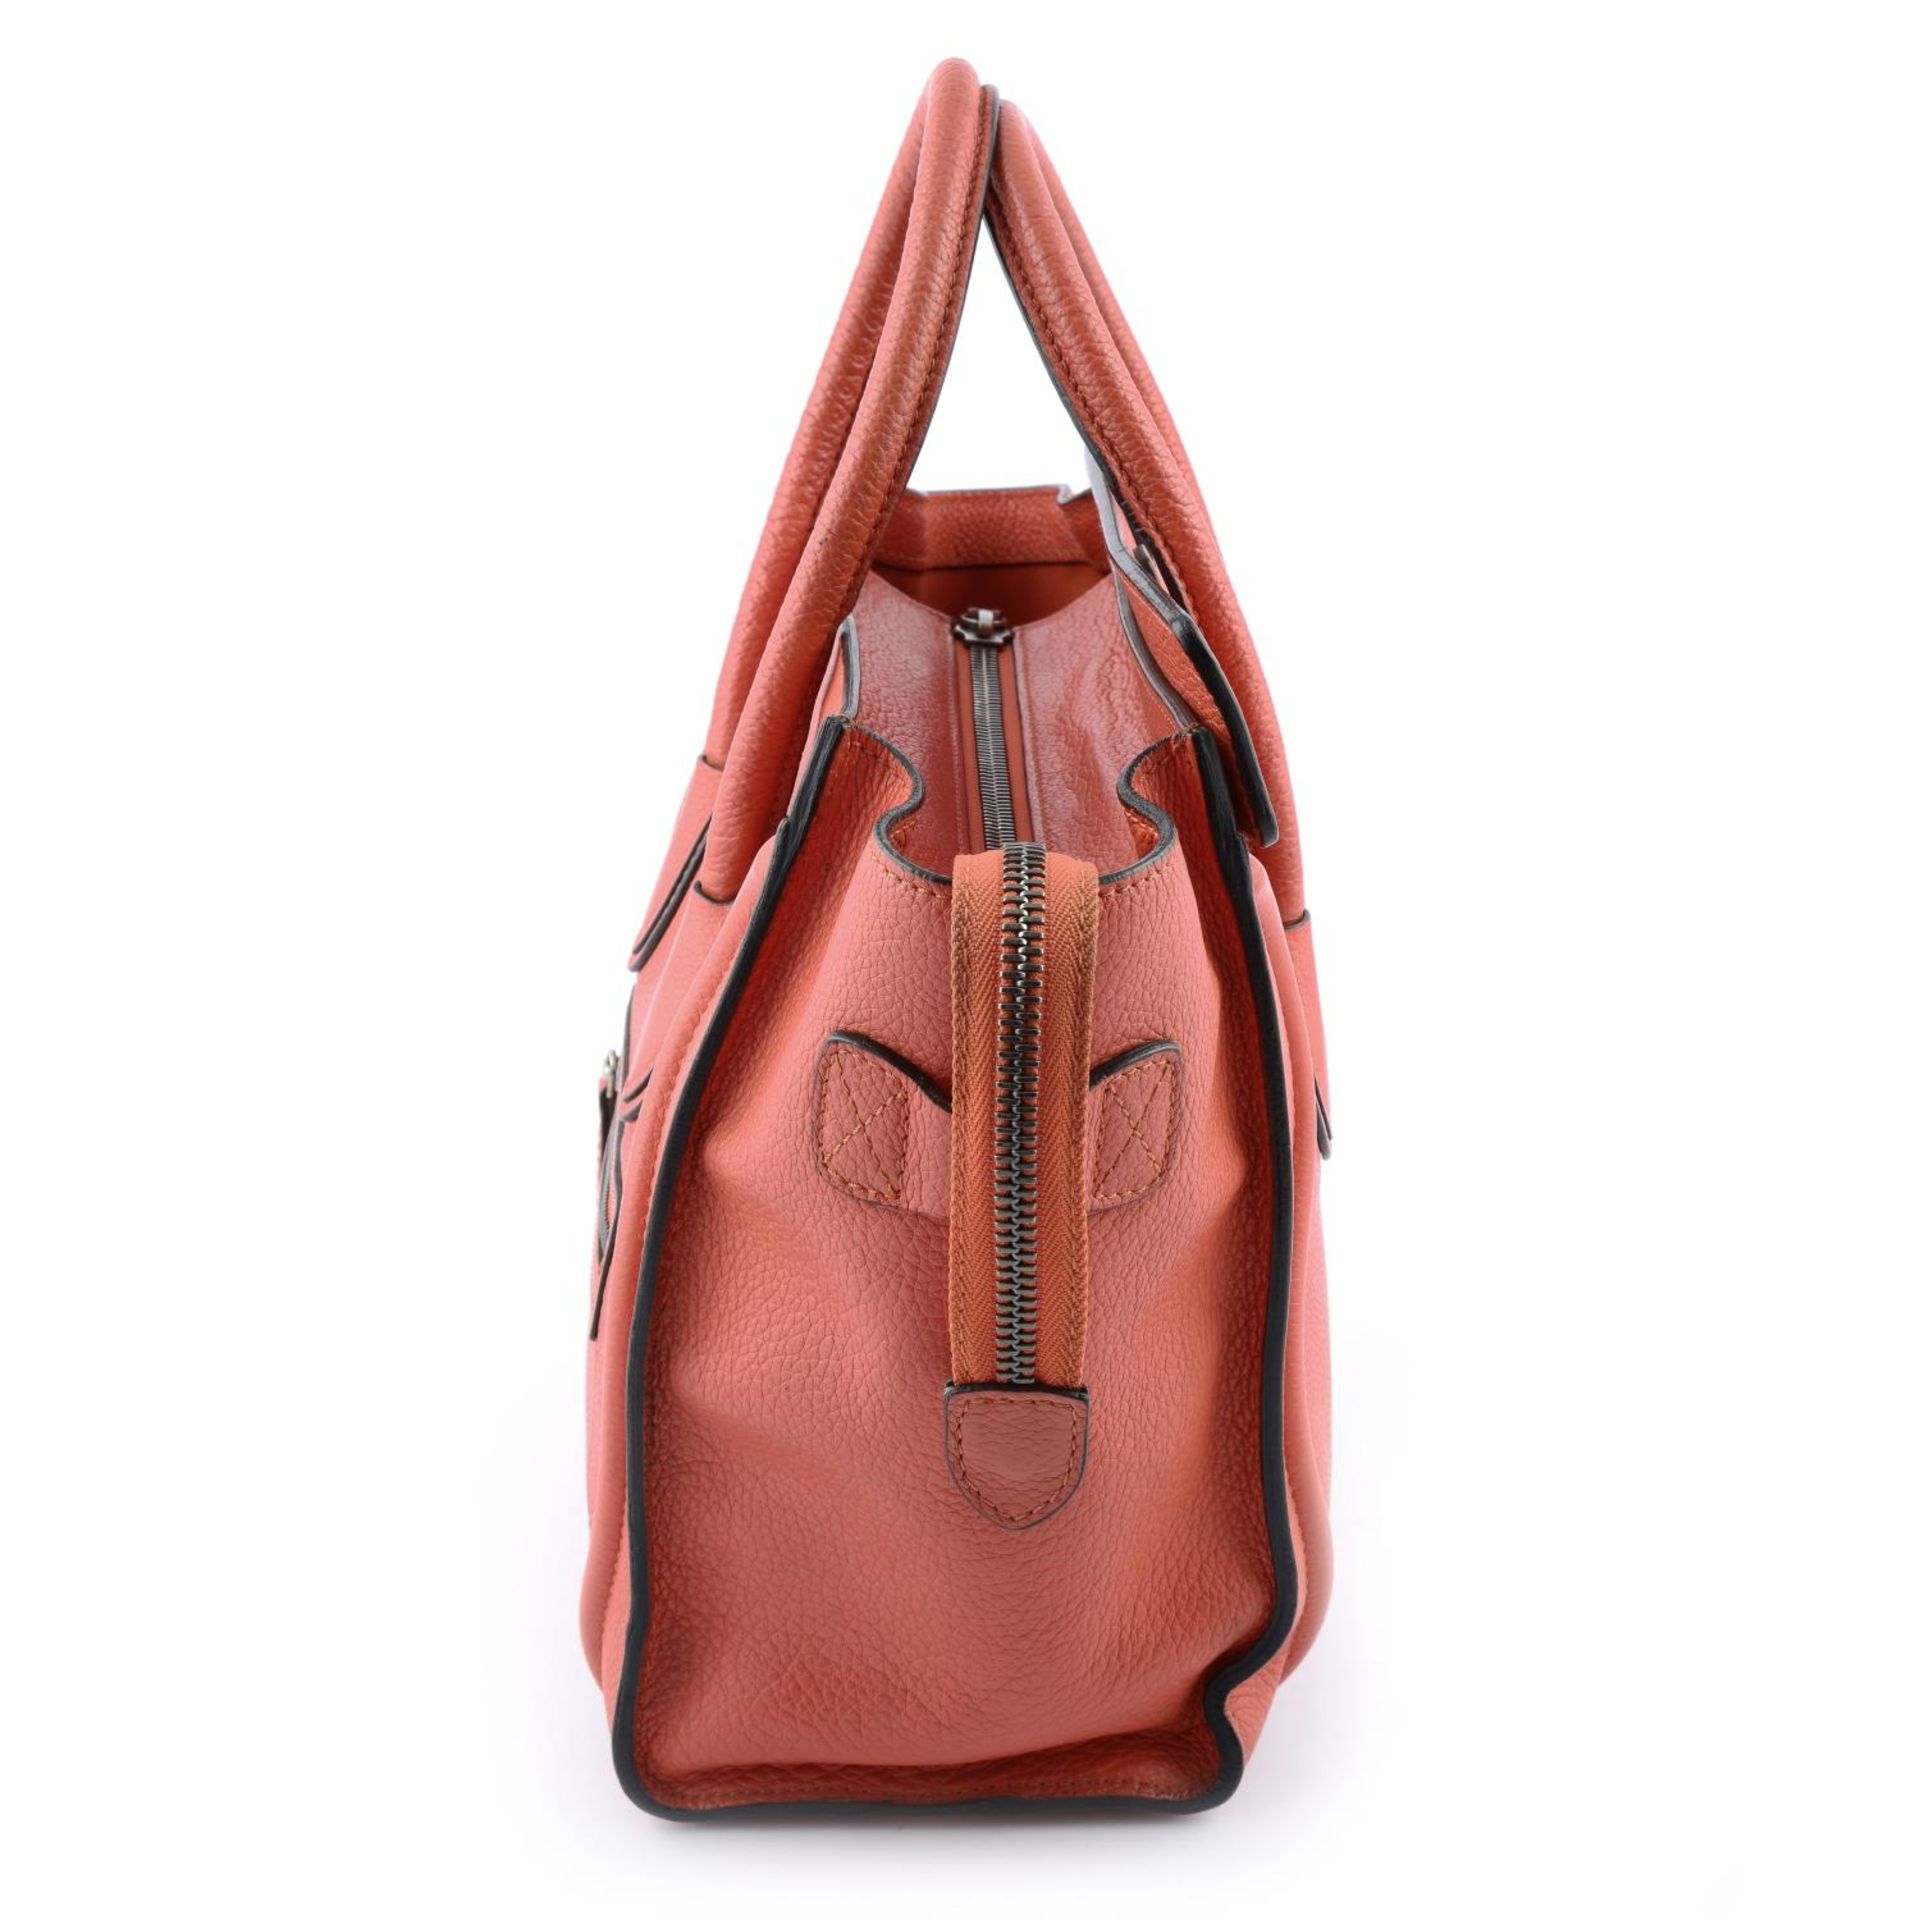 CÉLINE - a Micro Luggage Tote handbag. - Image 3 of 4